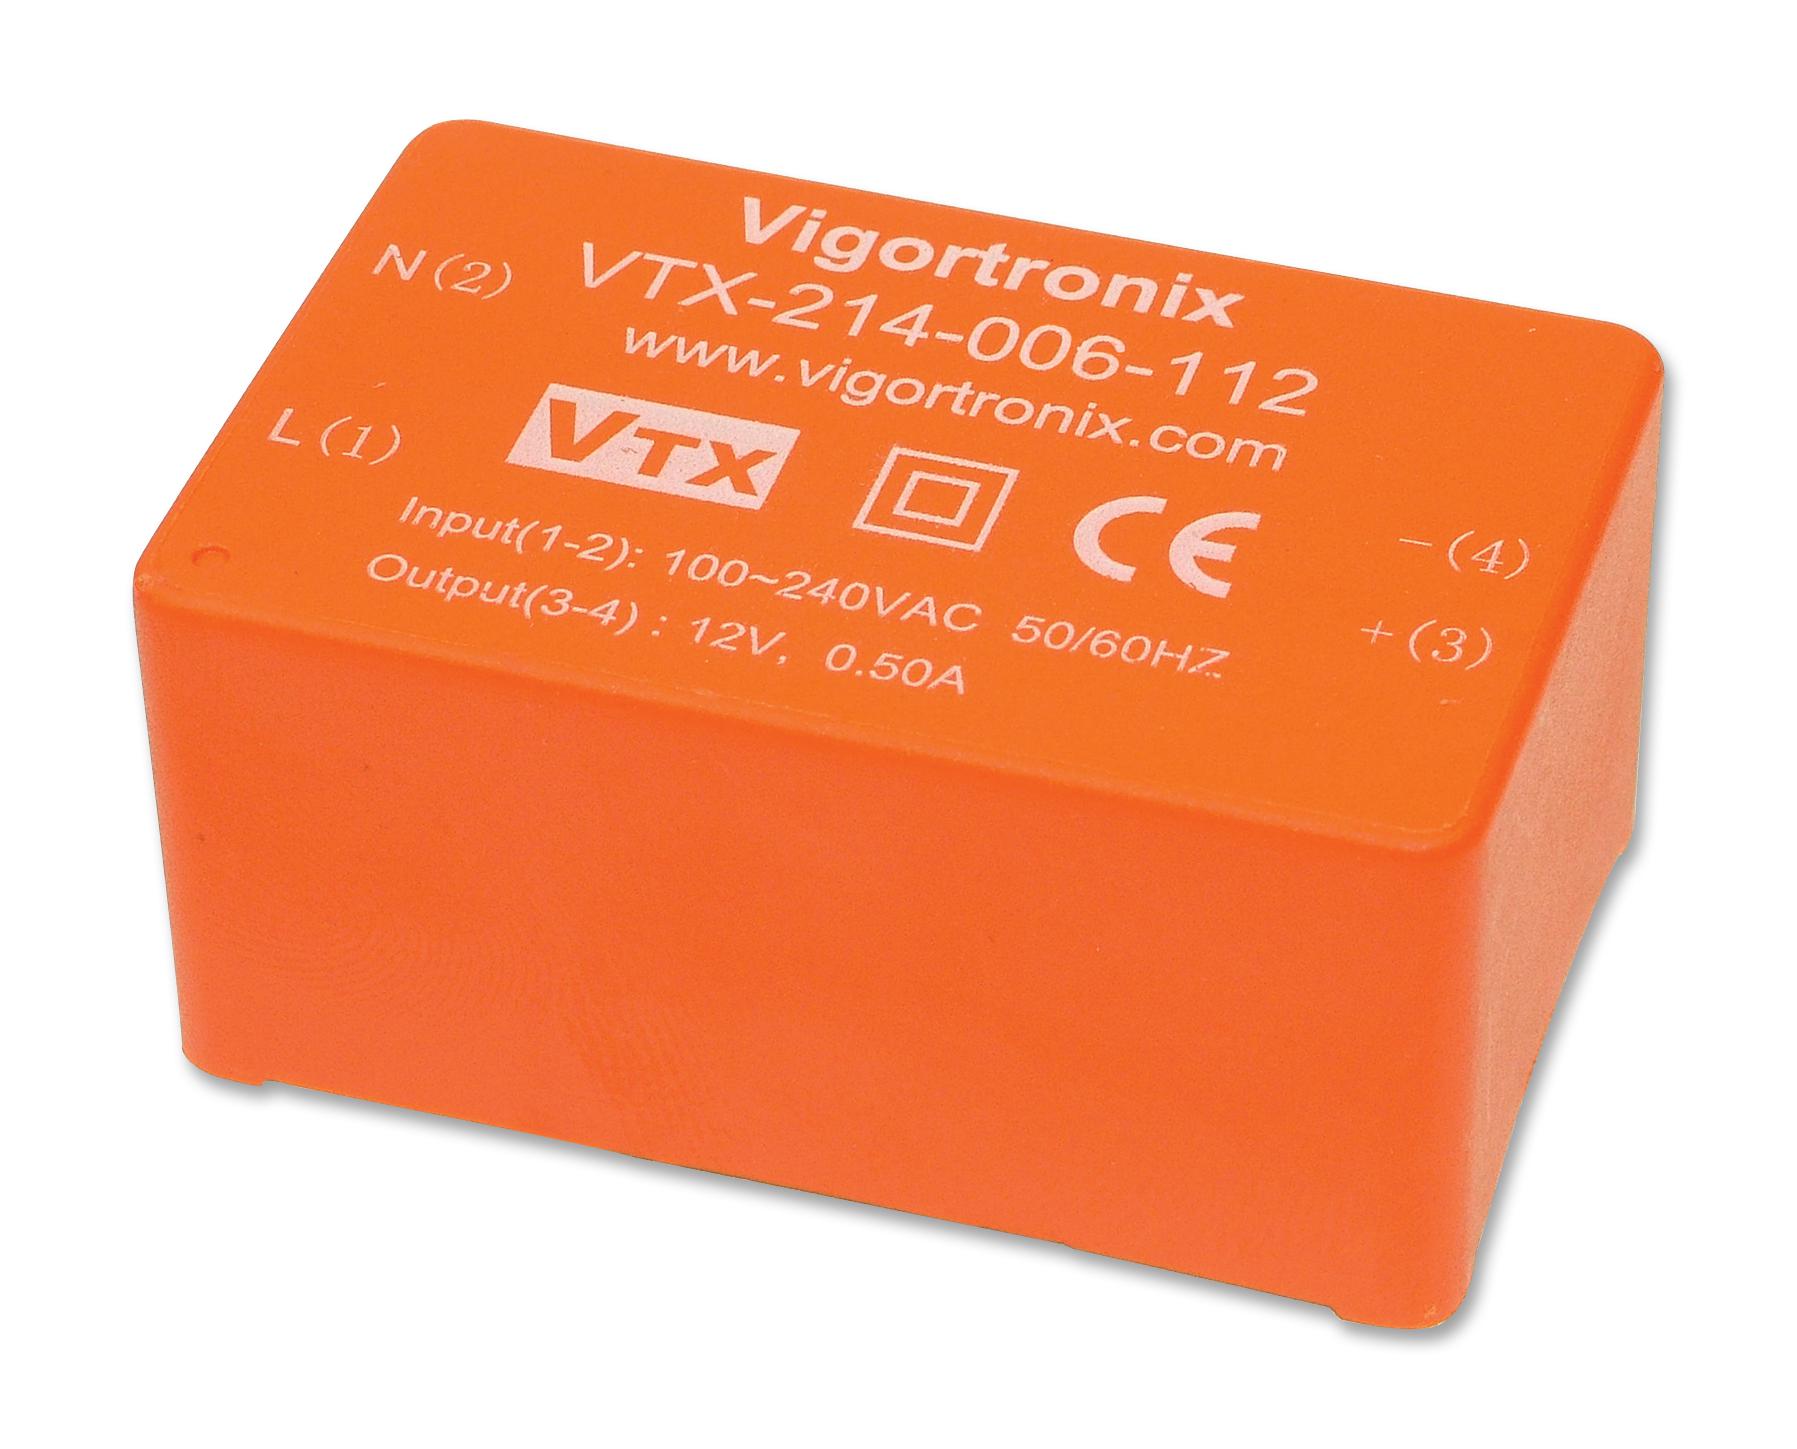 VTX-214-006-118 POWER SUPPLY, AC-DC, 18V, 0.333A VIGORTRONIX